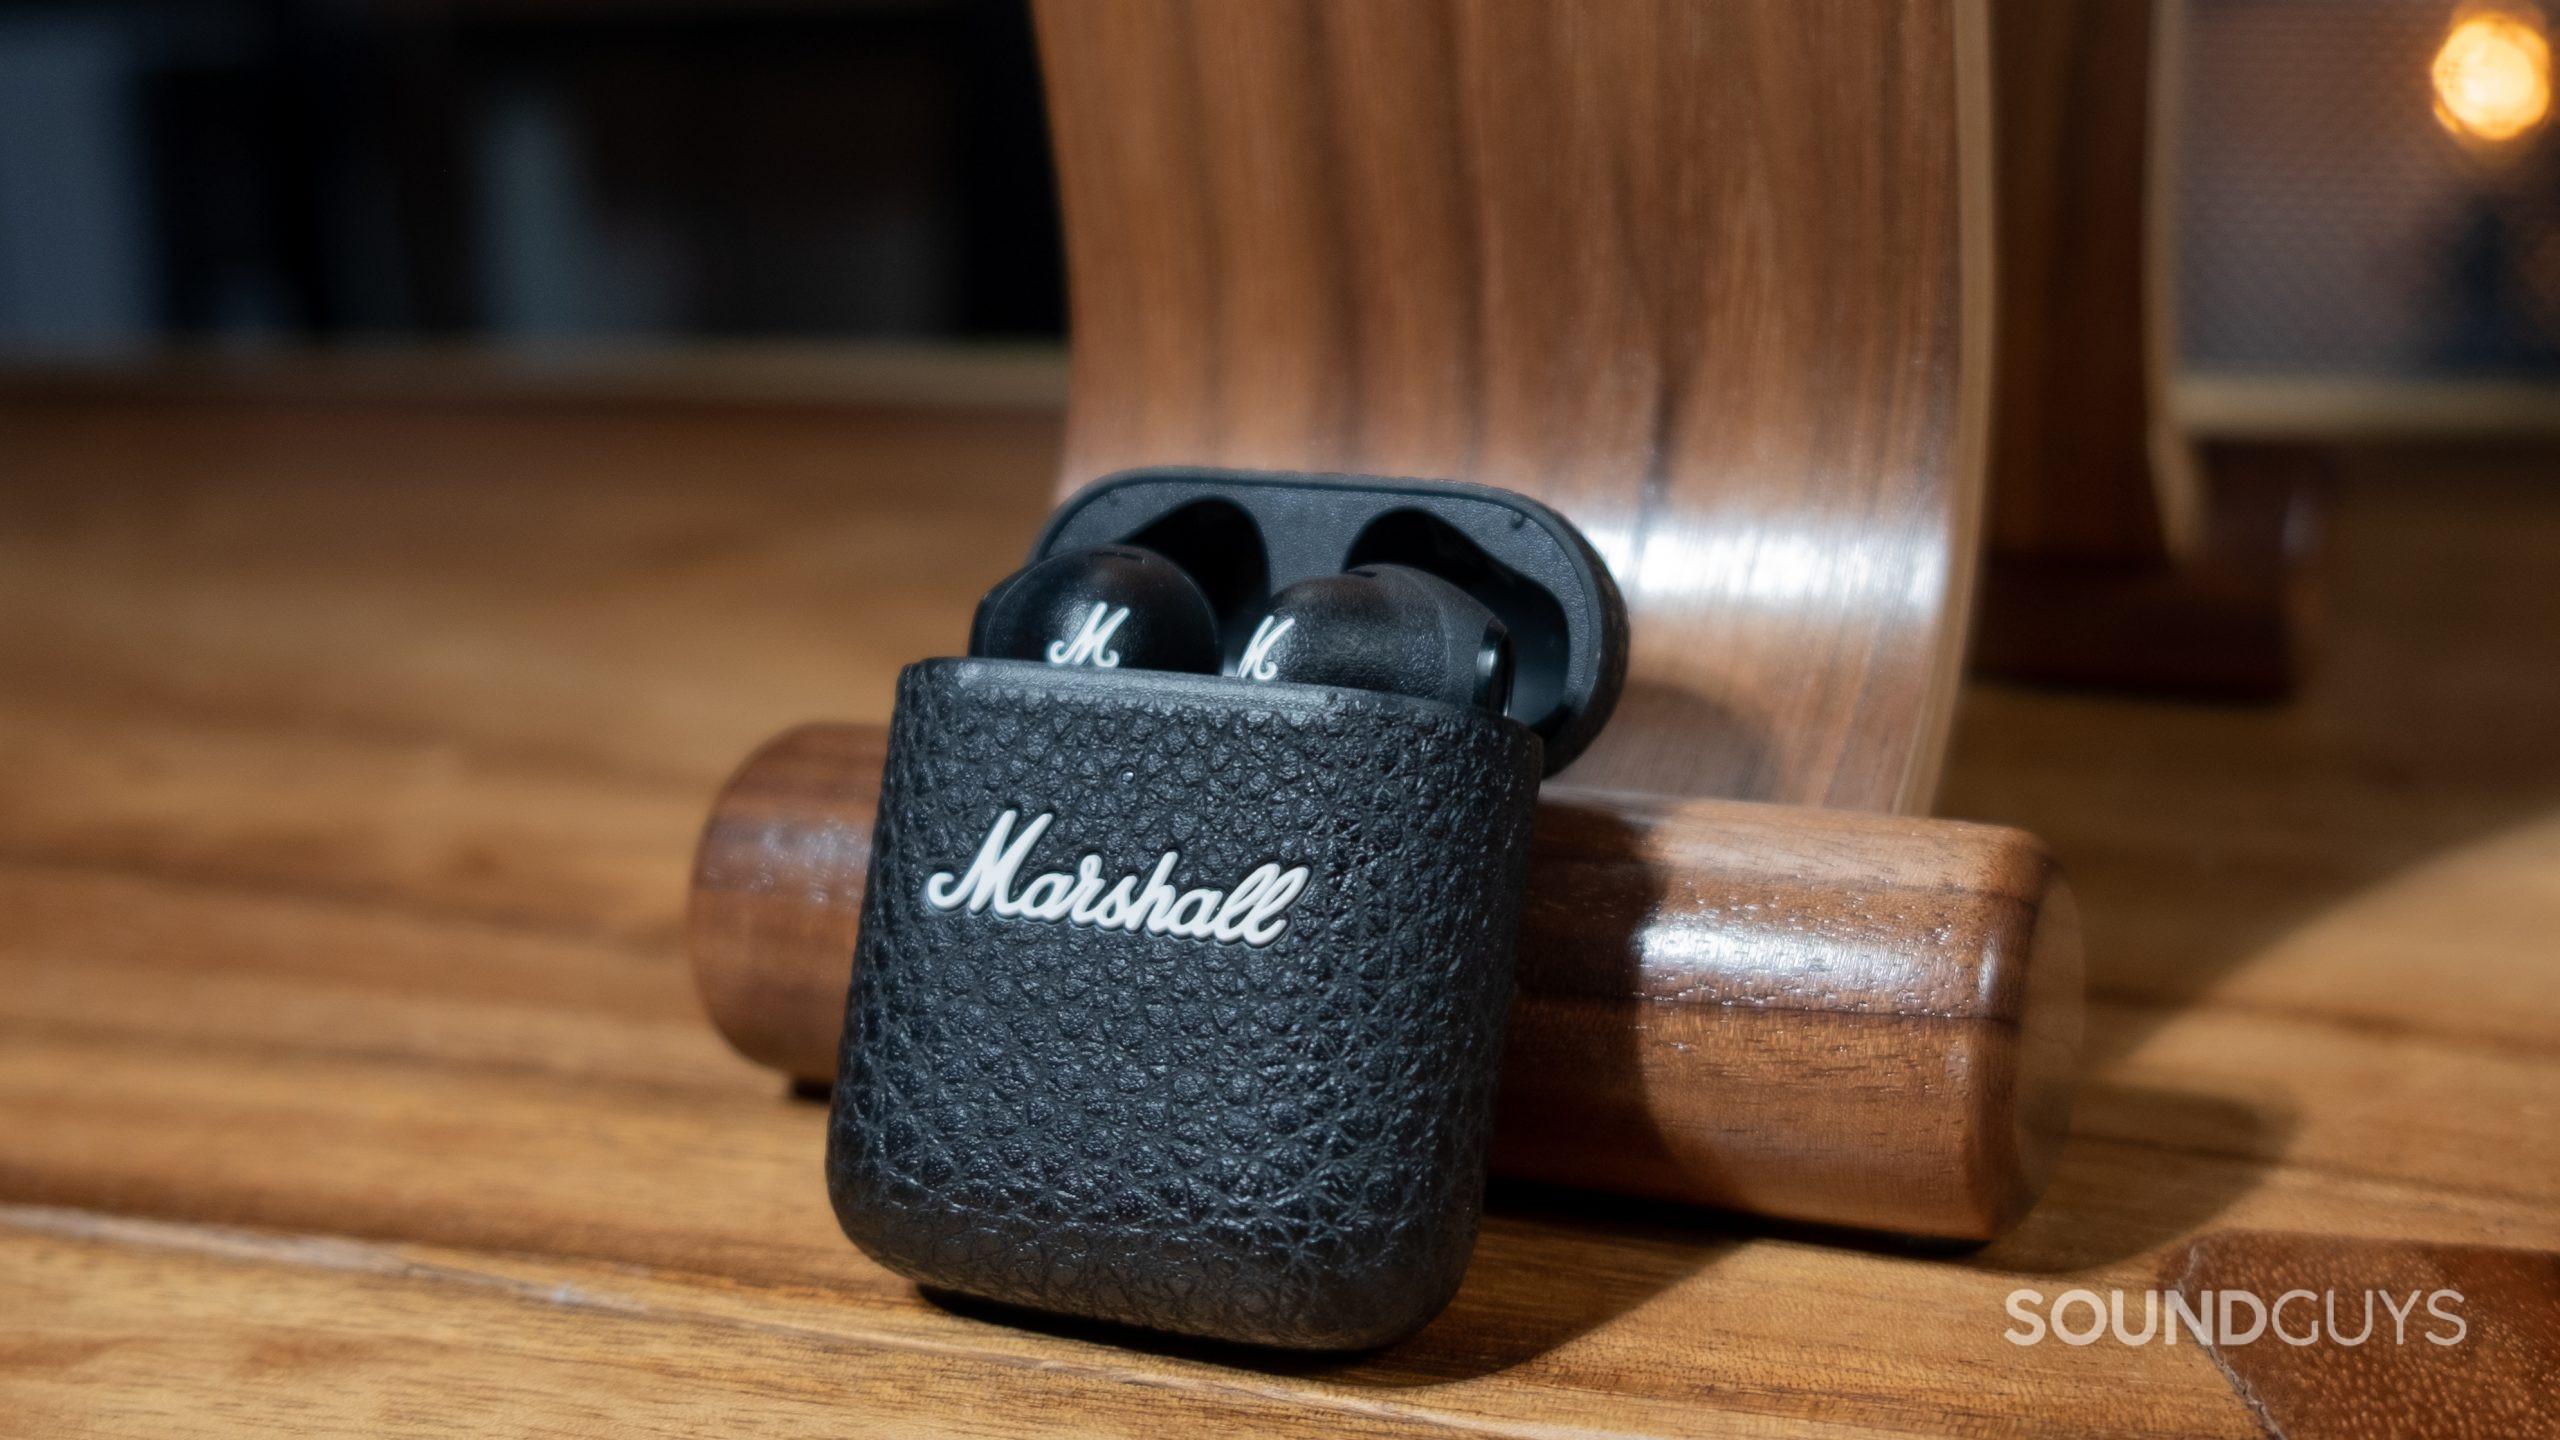 Marshall Minor III Bluetooth Wireless In-Ear Earphone - Black